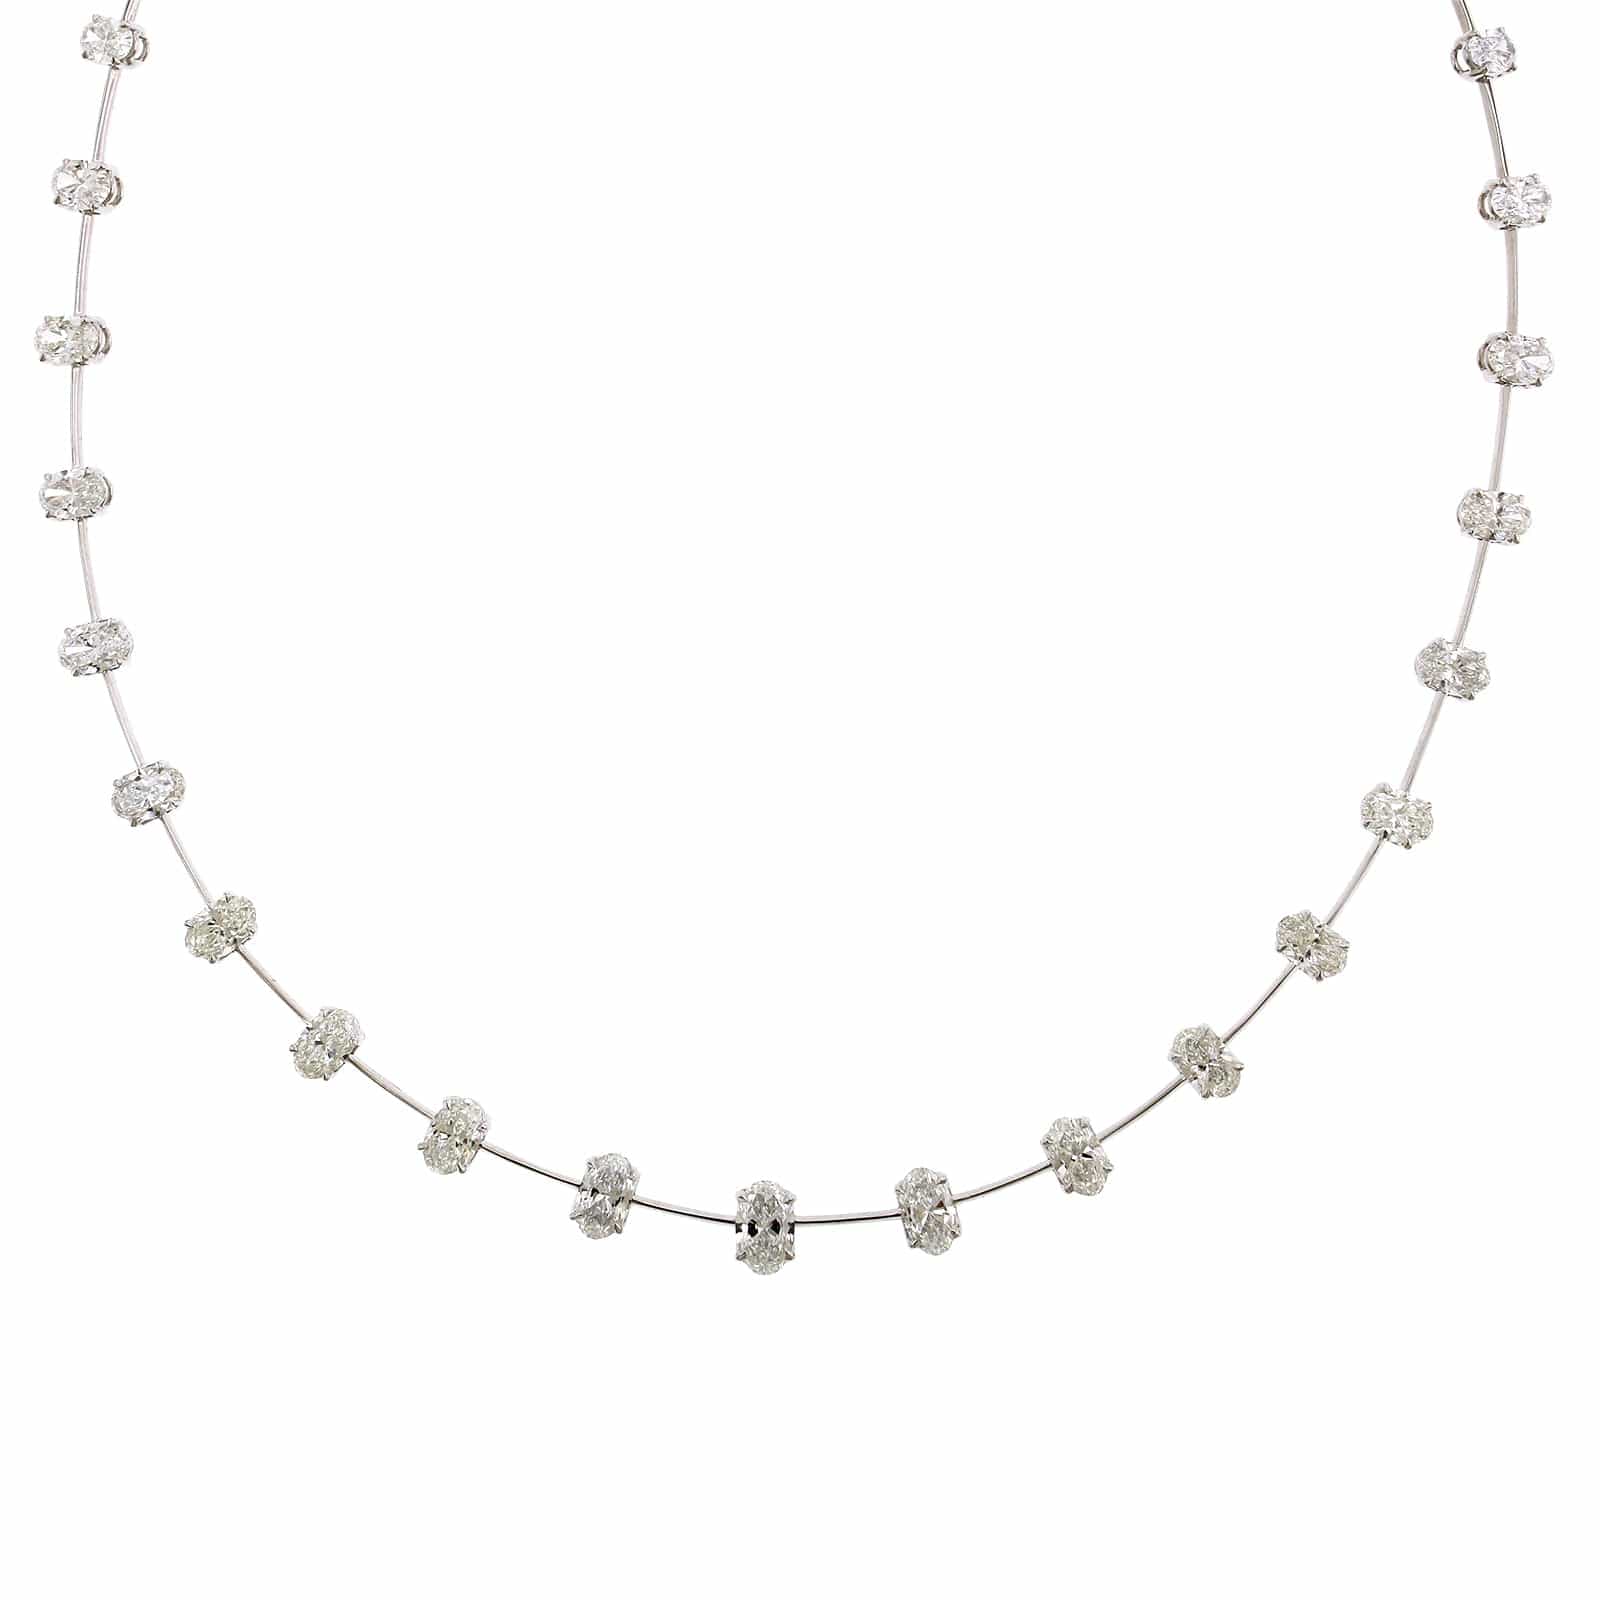 Etho Maria 18K White Gold Graduated Oval Cut Diamond Necklace